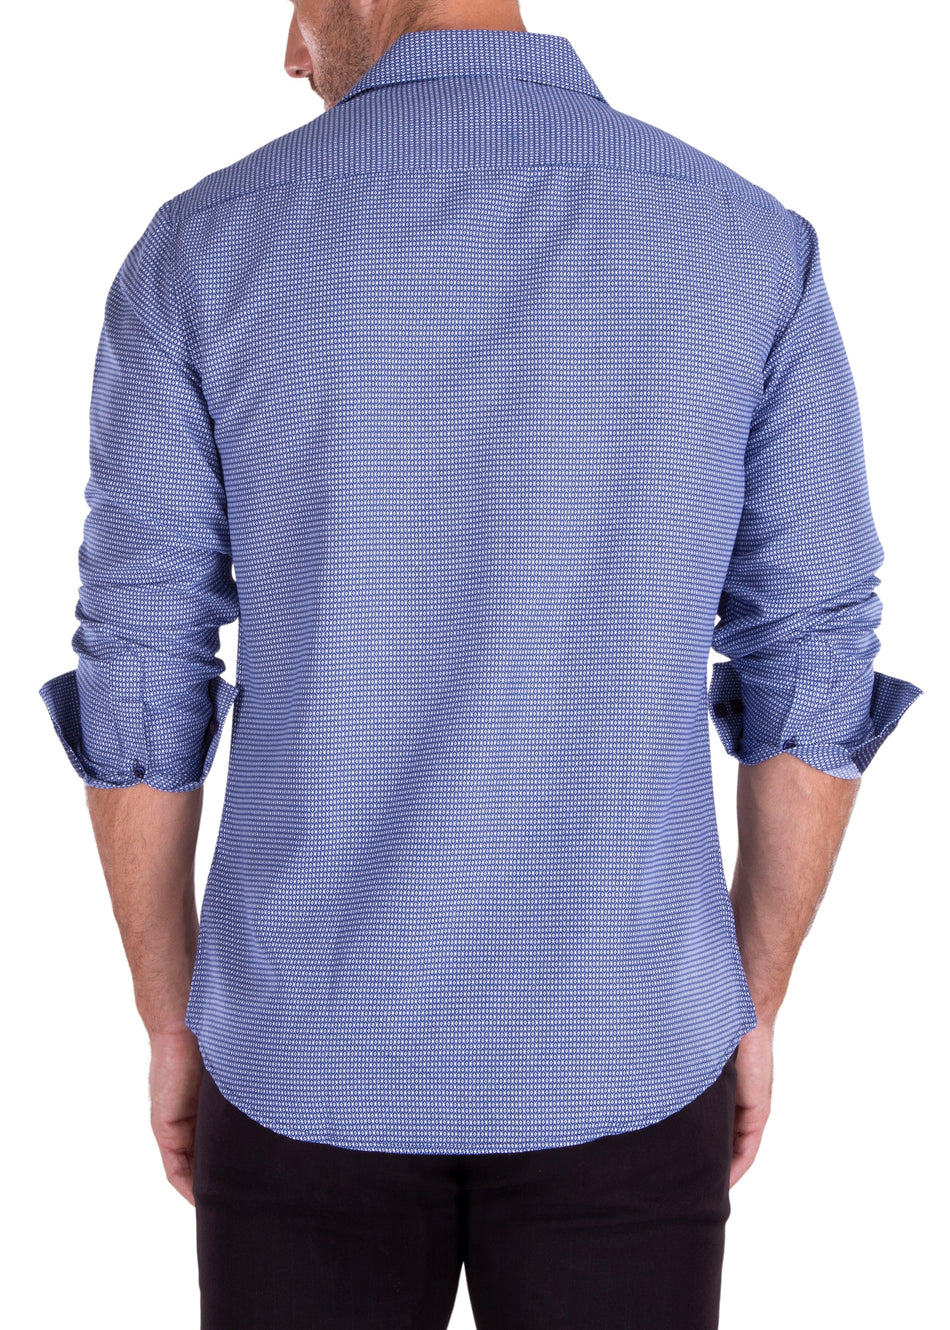 212387 - Navy Long Sleeve Shirt